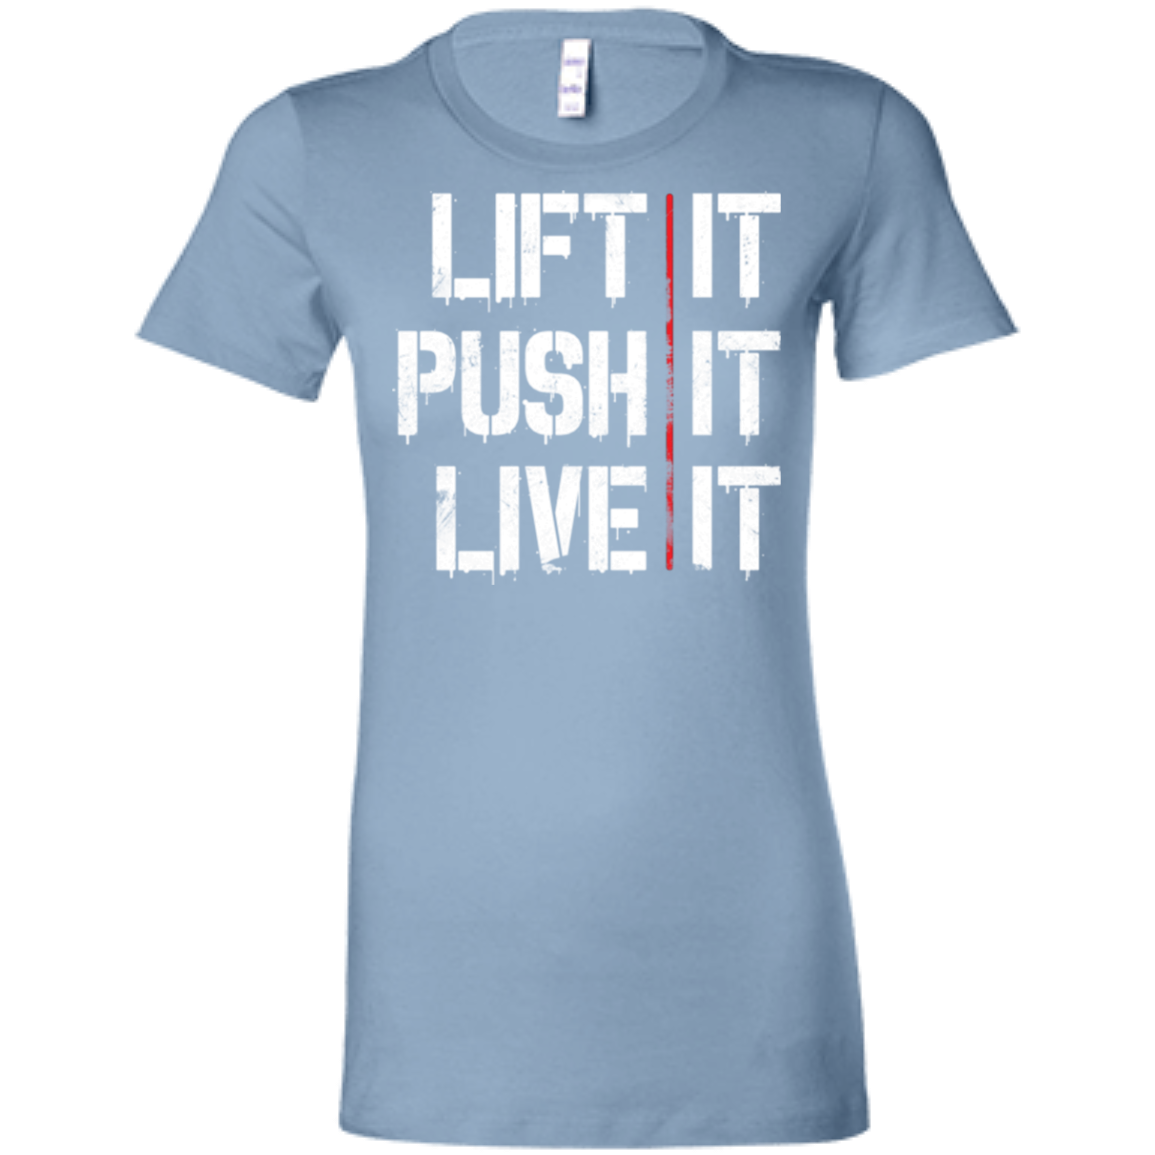 LIFT IT, PUSH IT, LIVE IT T-Shirt